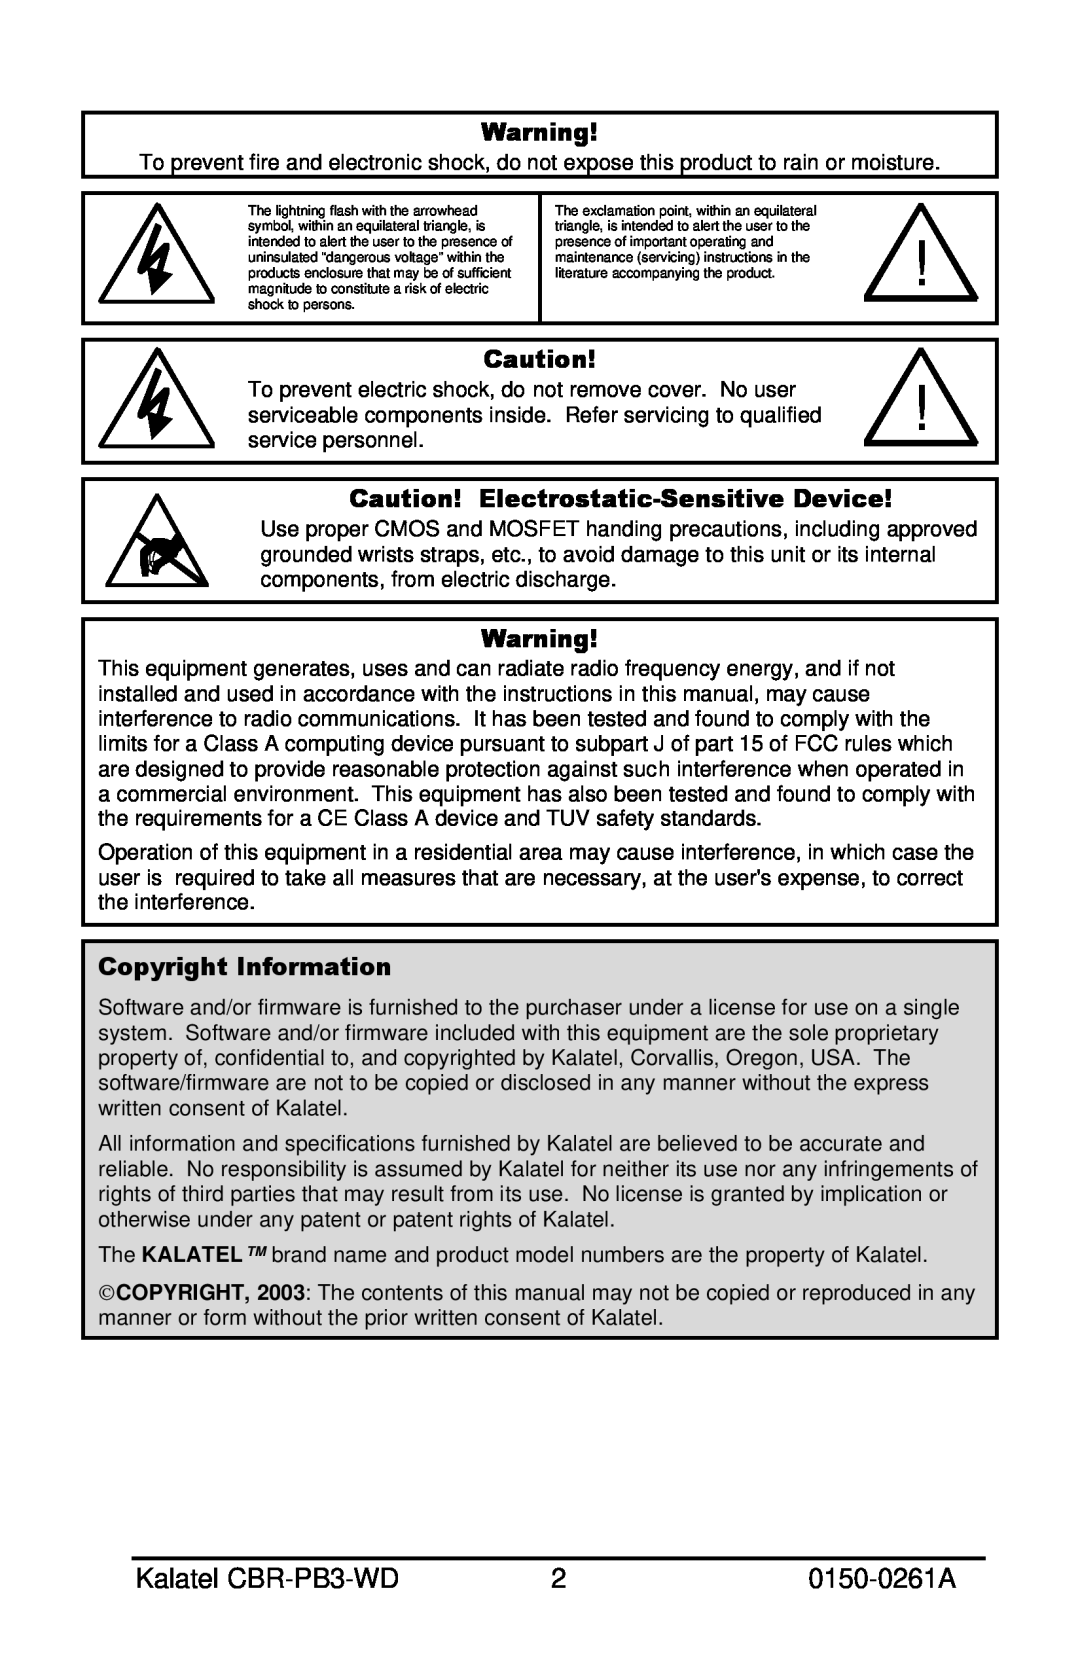 GE installation manual Kalatel CBR-PB3-WD, 0150-0261A, Caution! Electrostatic-Sensitive Device, Copyright Information 